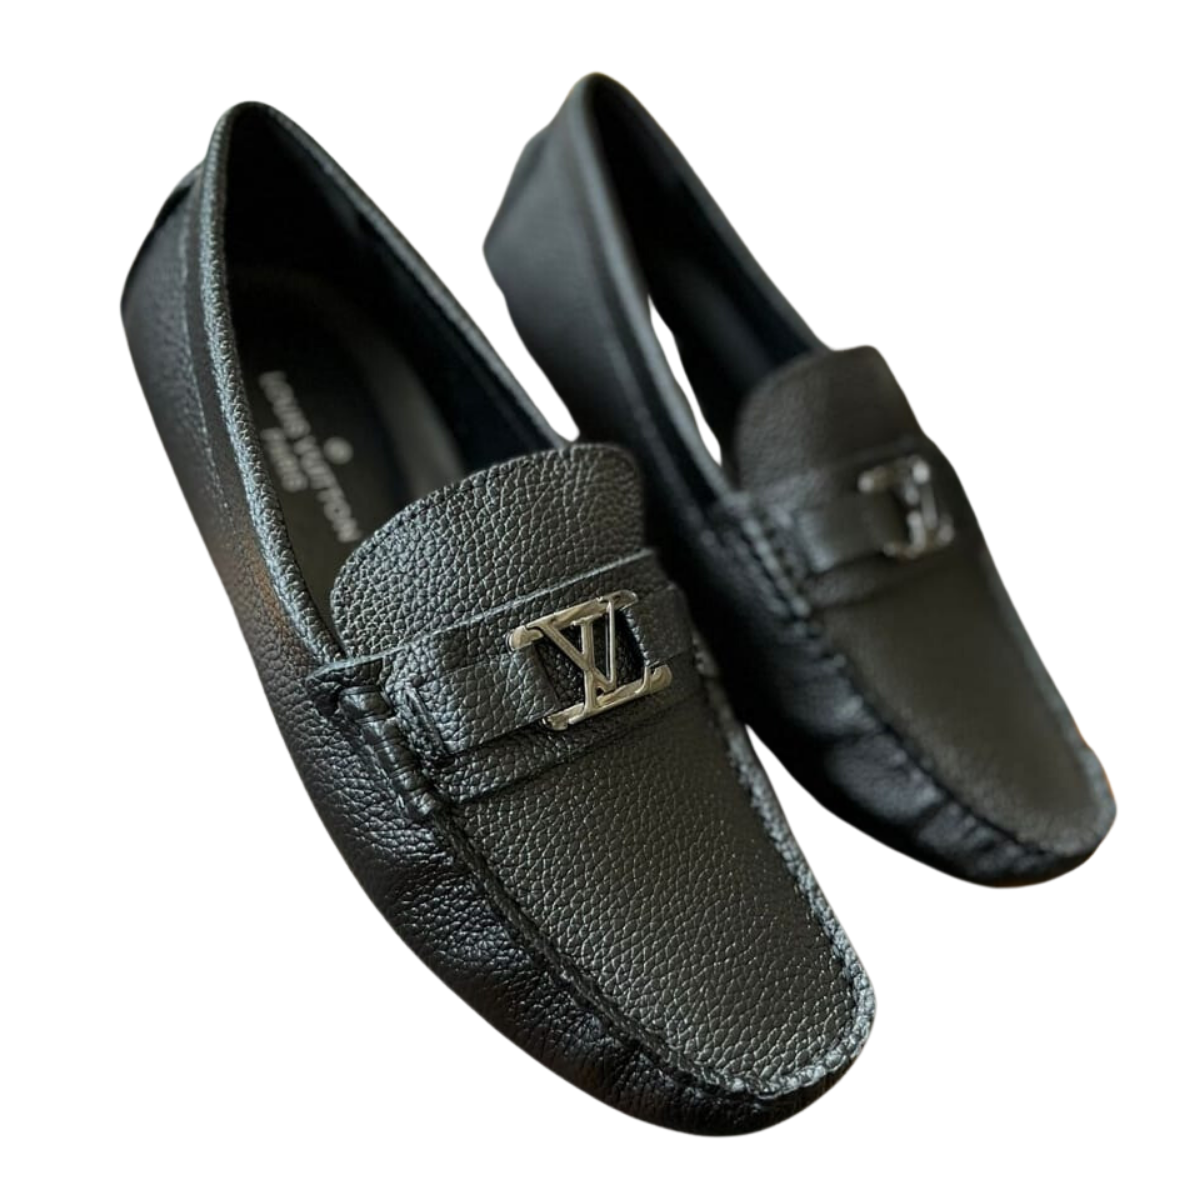 mocasines Louis Vuitton hombre originales comprar en onlineshoppingcenterg Colombia centro de compras en linea osc 1